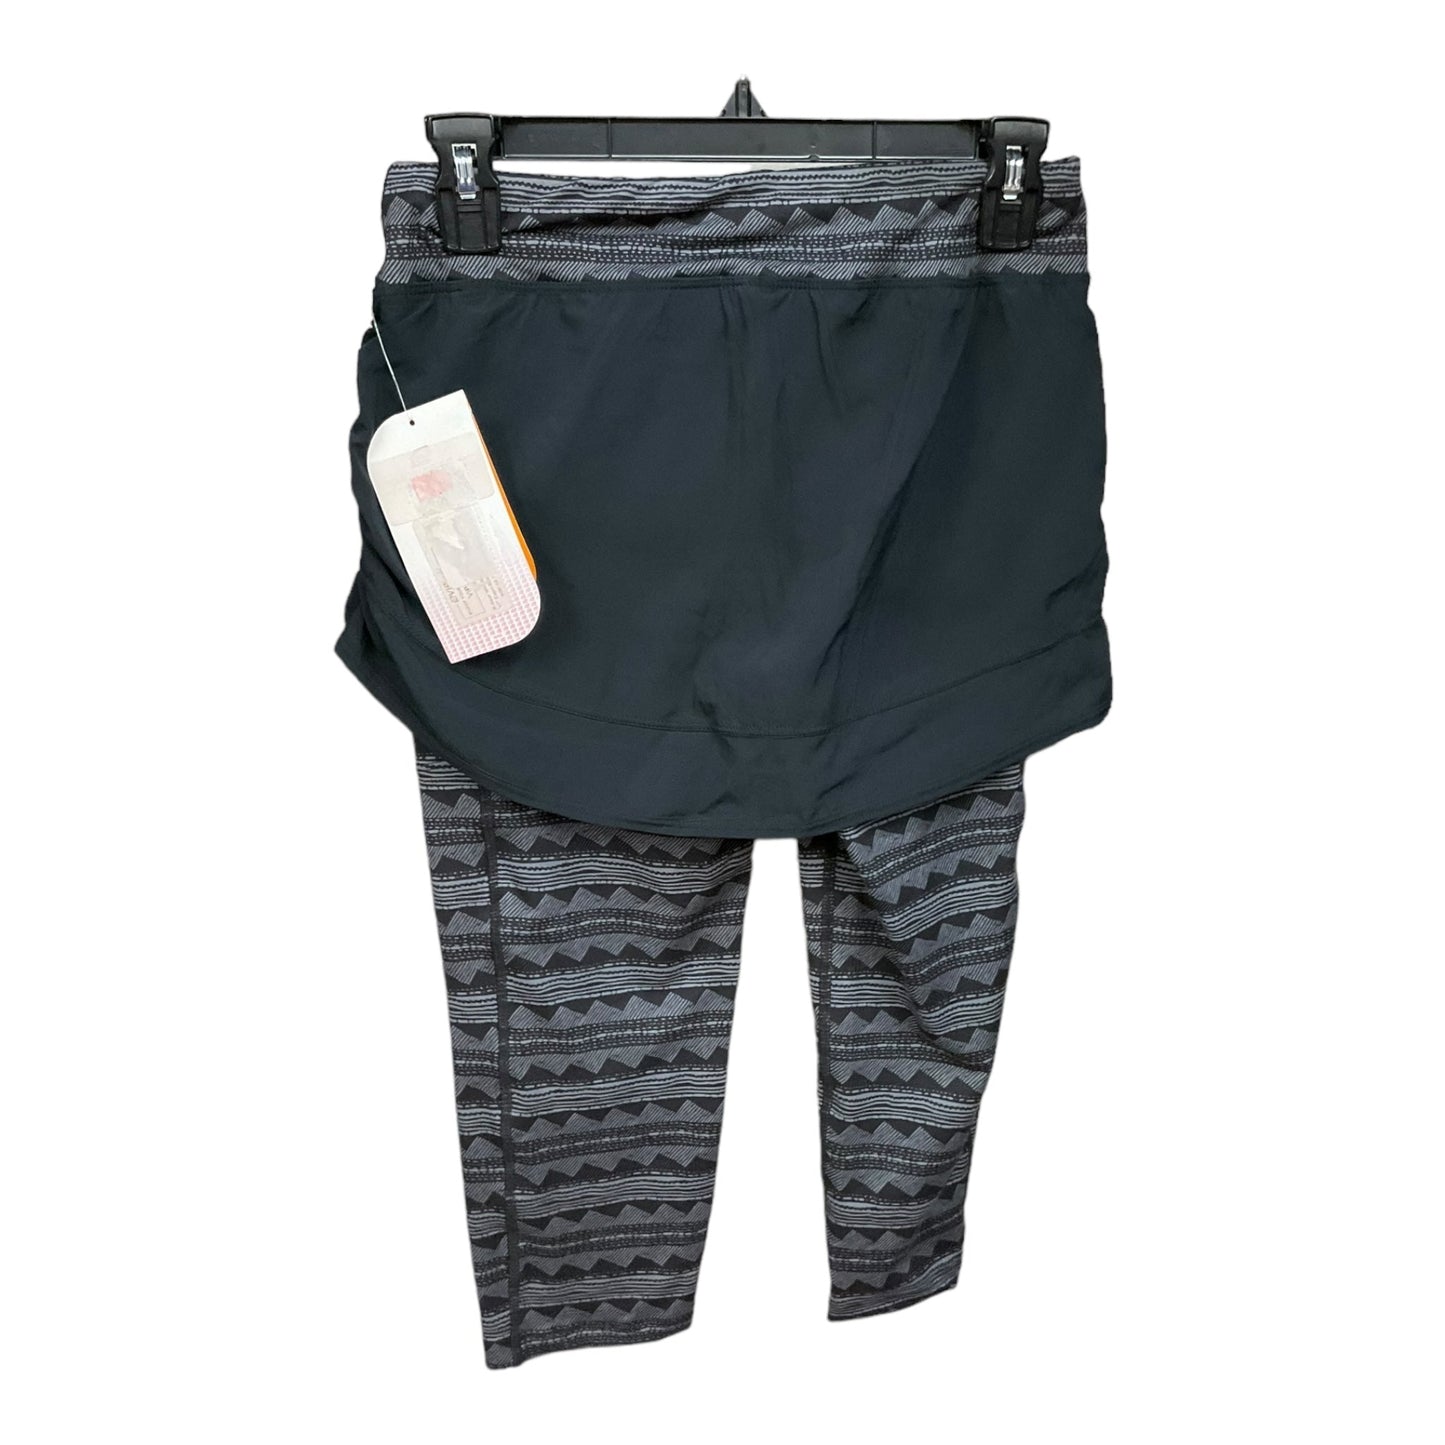 Black & Grey Athletic Pants 2pc Clothes Mentor, Size Xs